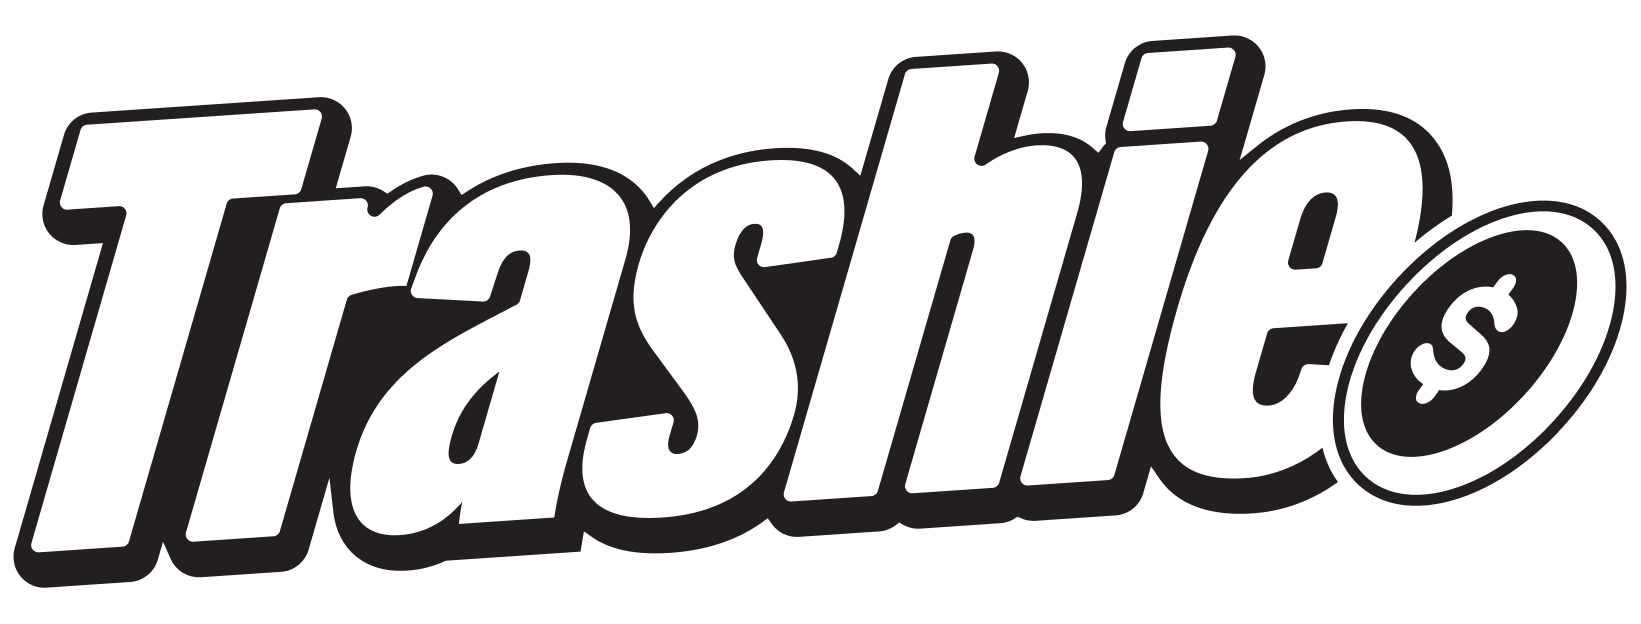 Trashie logo